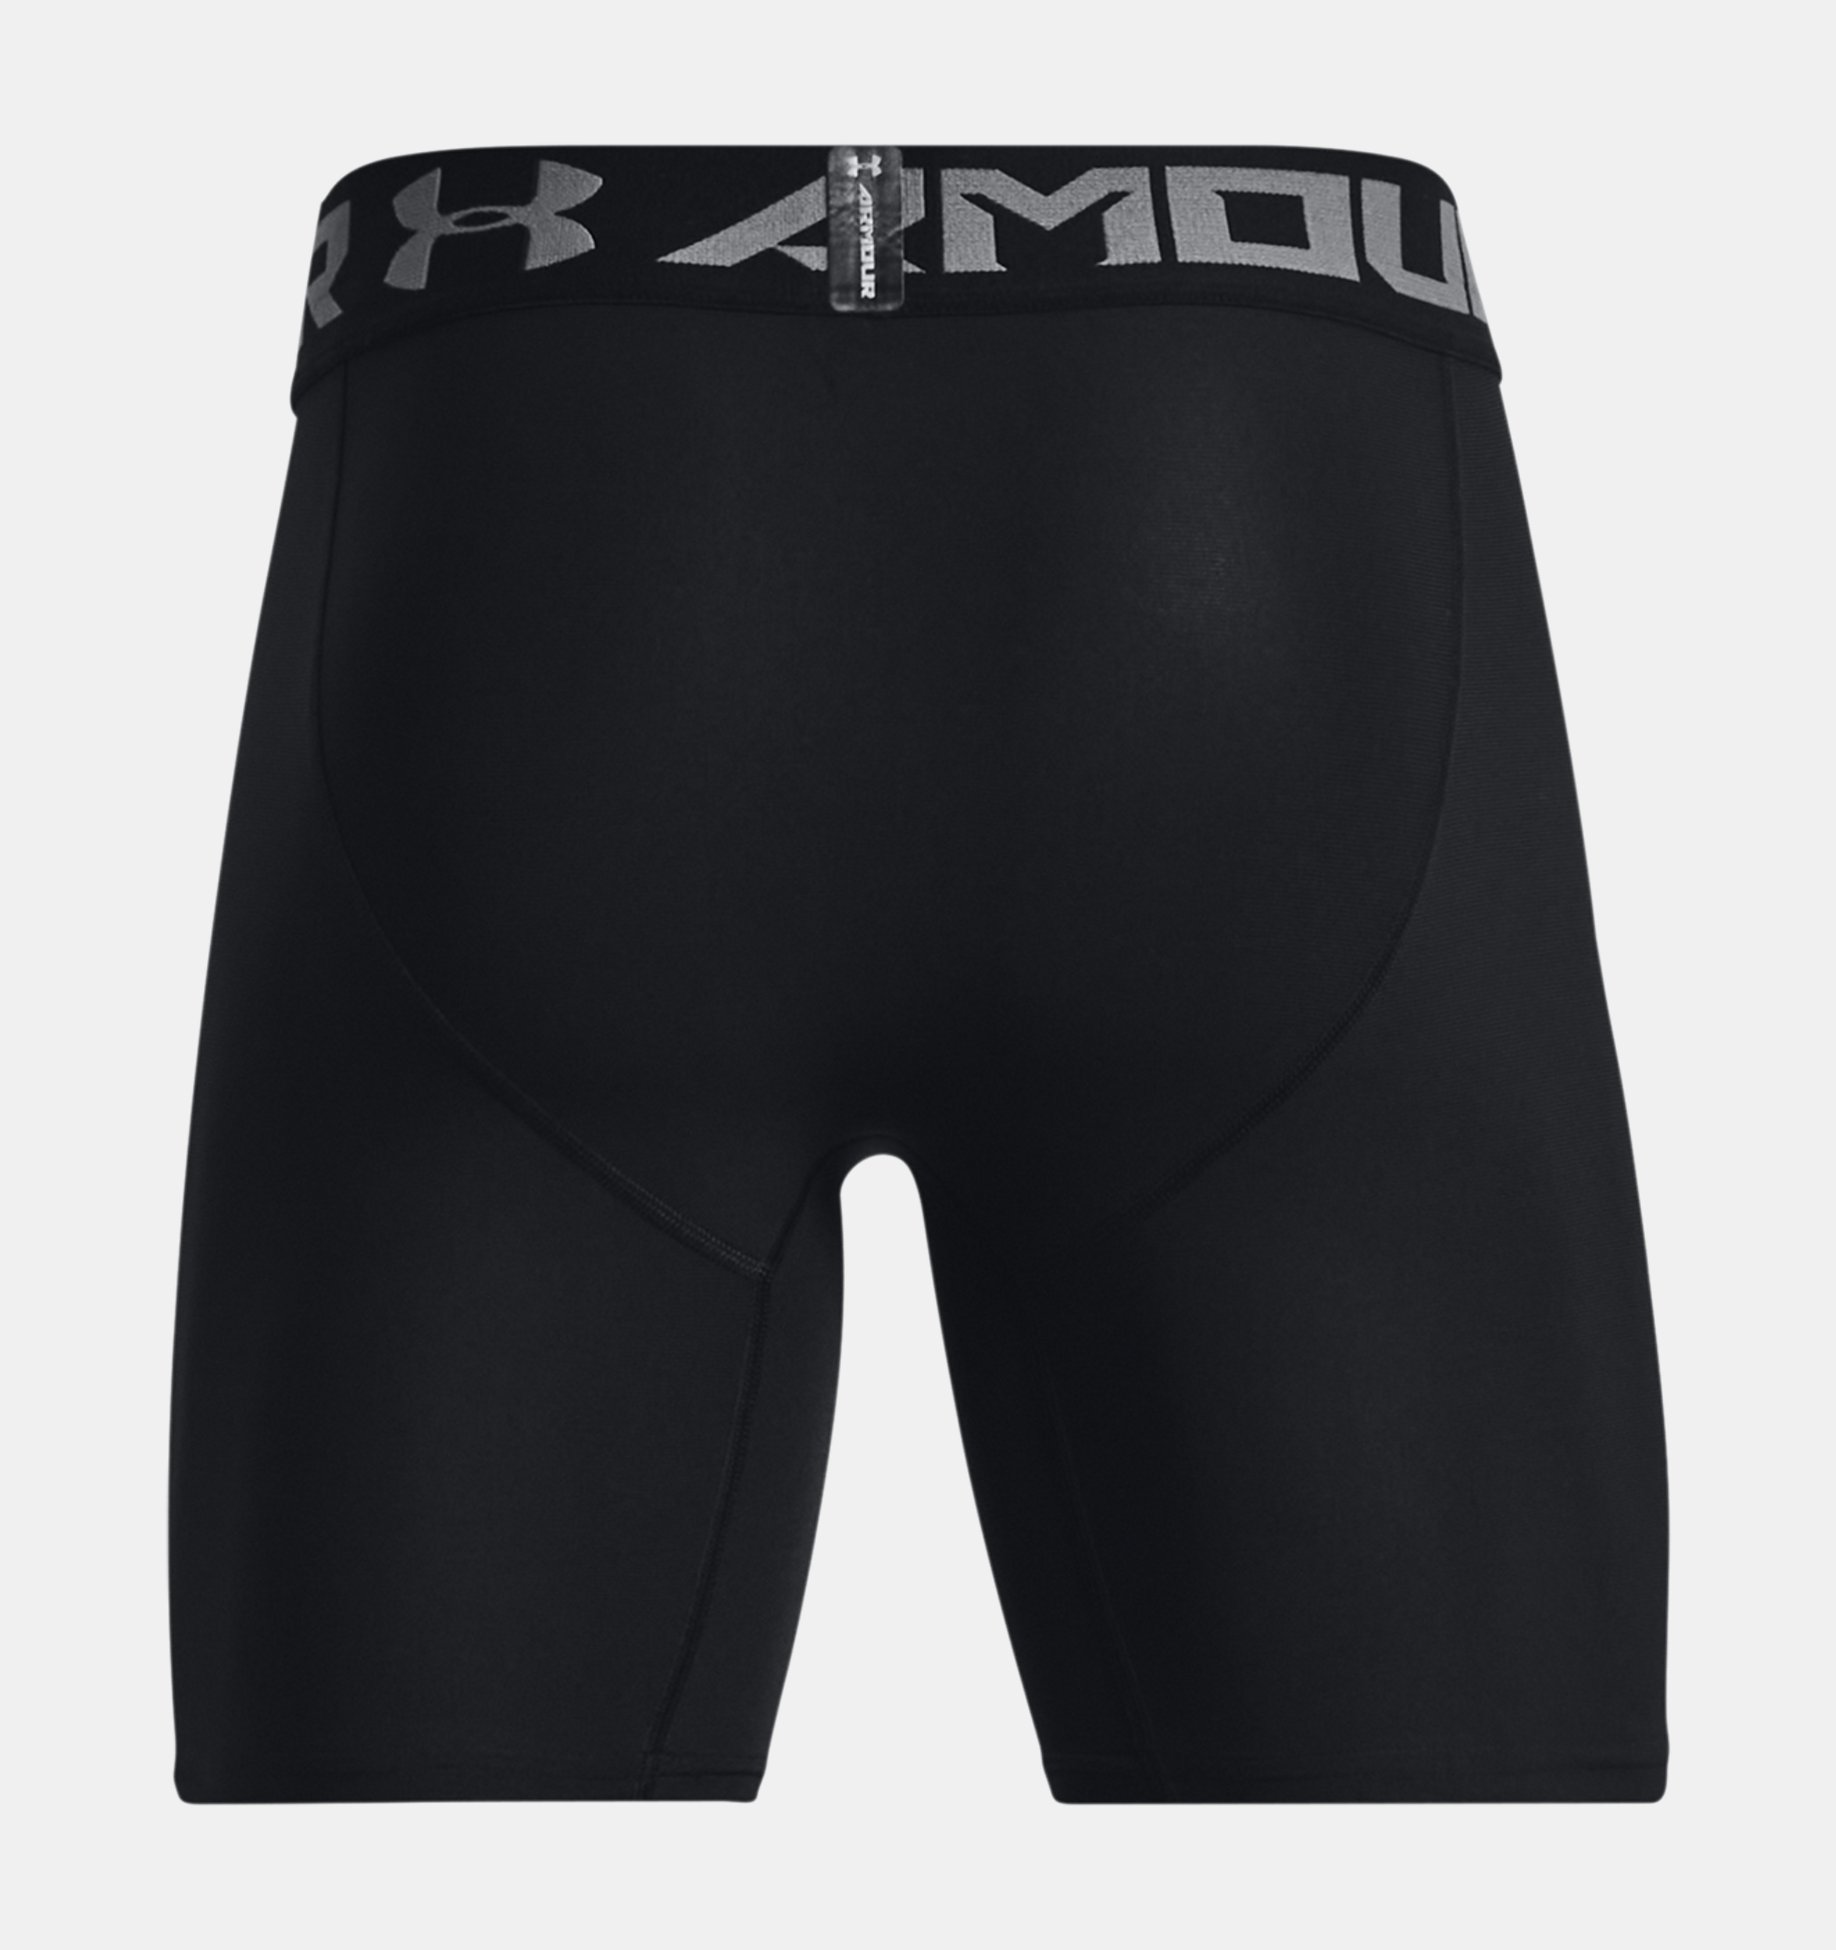 Under Armour Black HeatGear Mid Compression Shorts Men's Size Large 9702 for sale online 